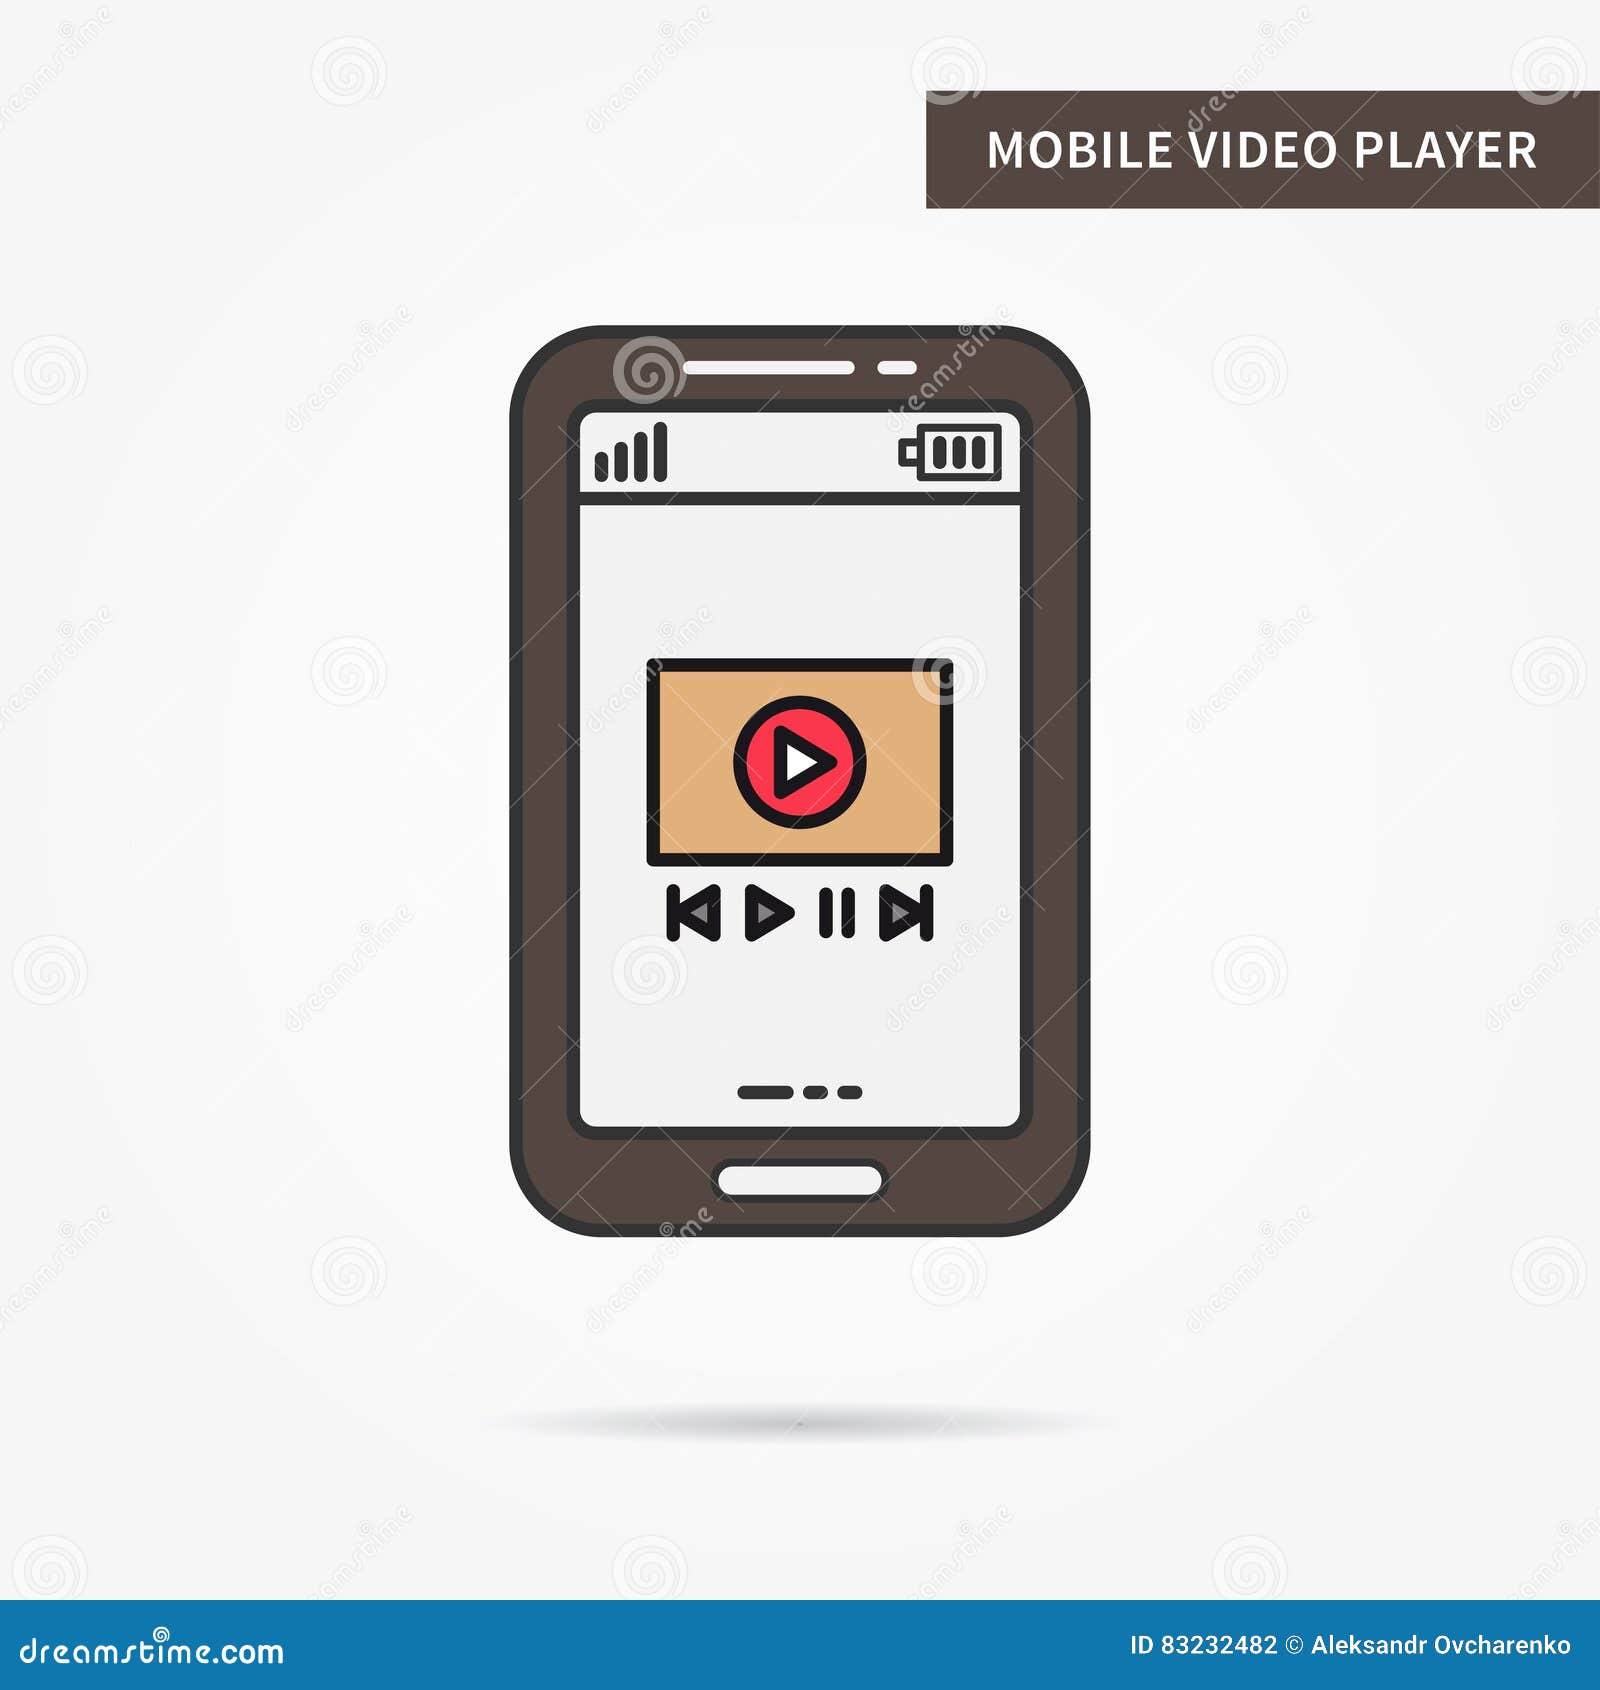 linear-mobile-video-player-flat-phone-online-stream-audio-multimedia-film-movie-app-web-technology-symbol-83232482.jpg